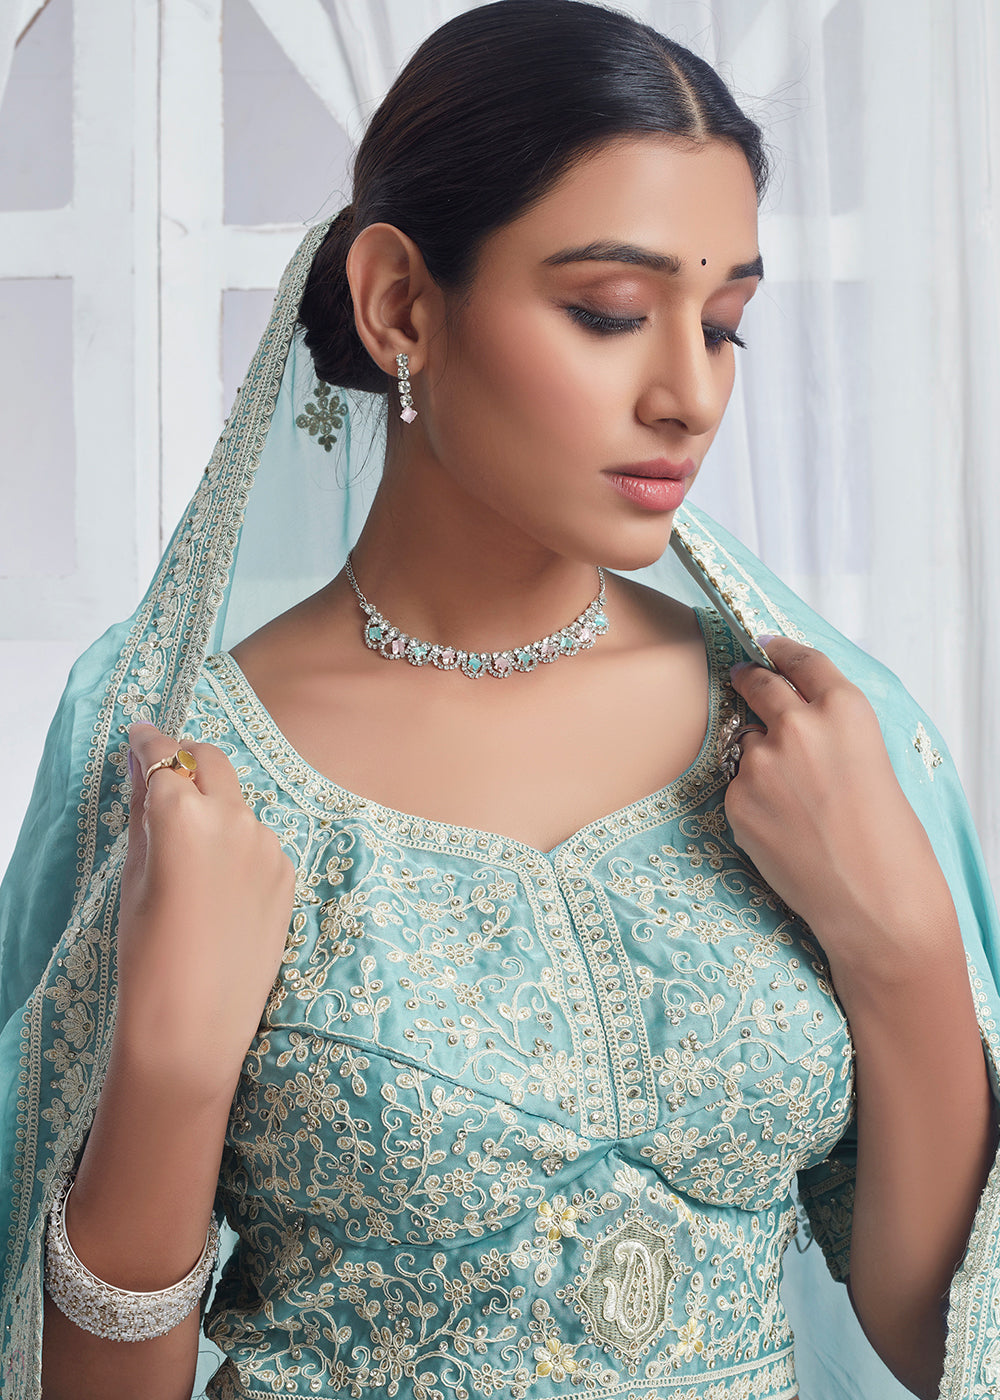 Buy Now Sky Blue Designer Style Embroidered Wedding Lehenga Choli Online in USA, UK, Canada & Worldwide at Empress Clothing.